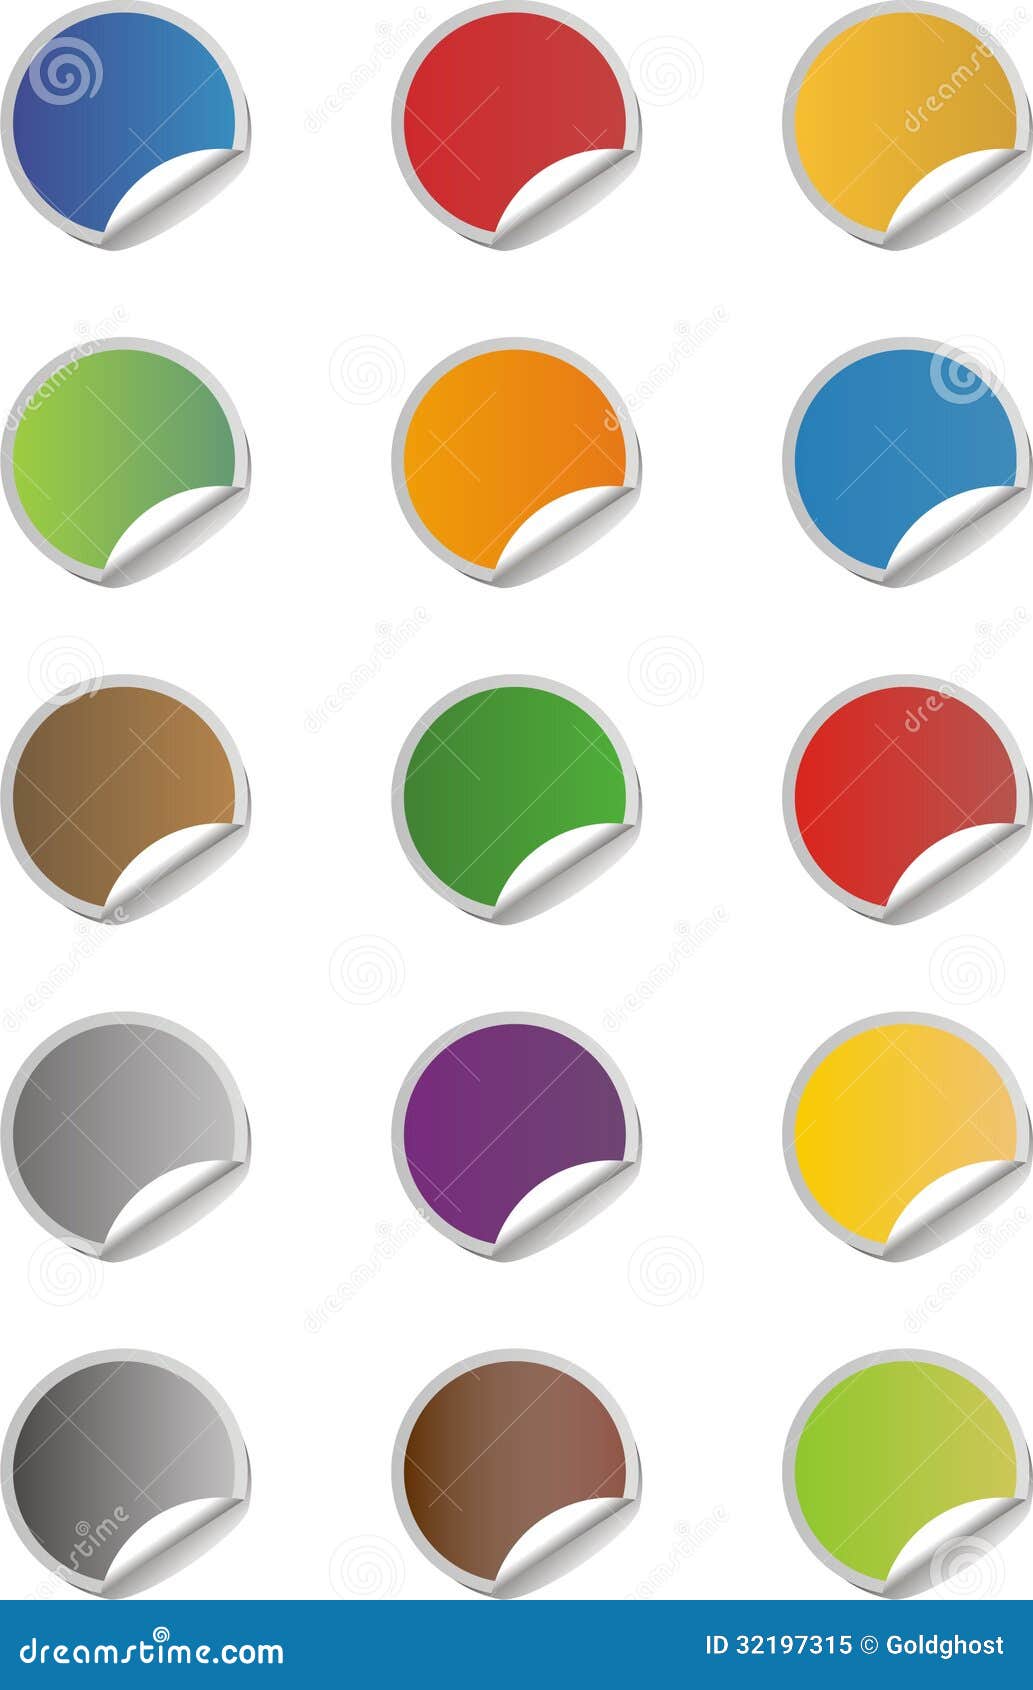 Blank sticker icons set stock vector. Illustration of internet - 32197315